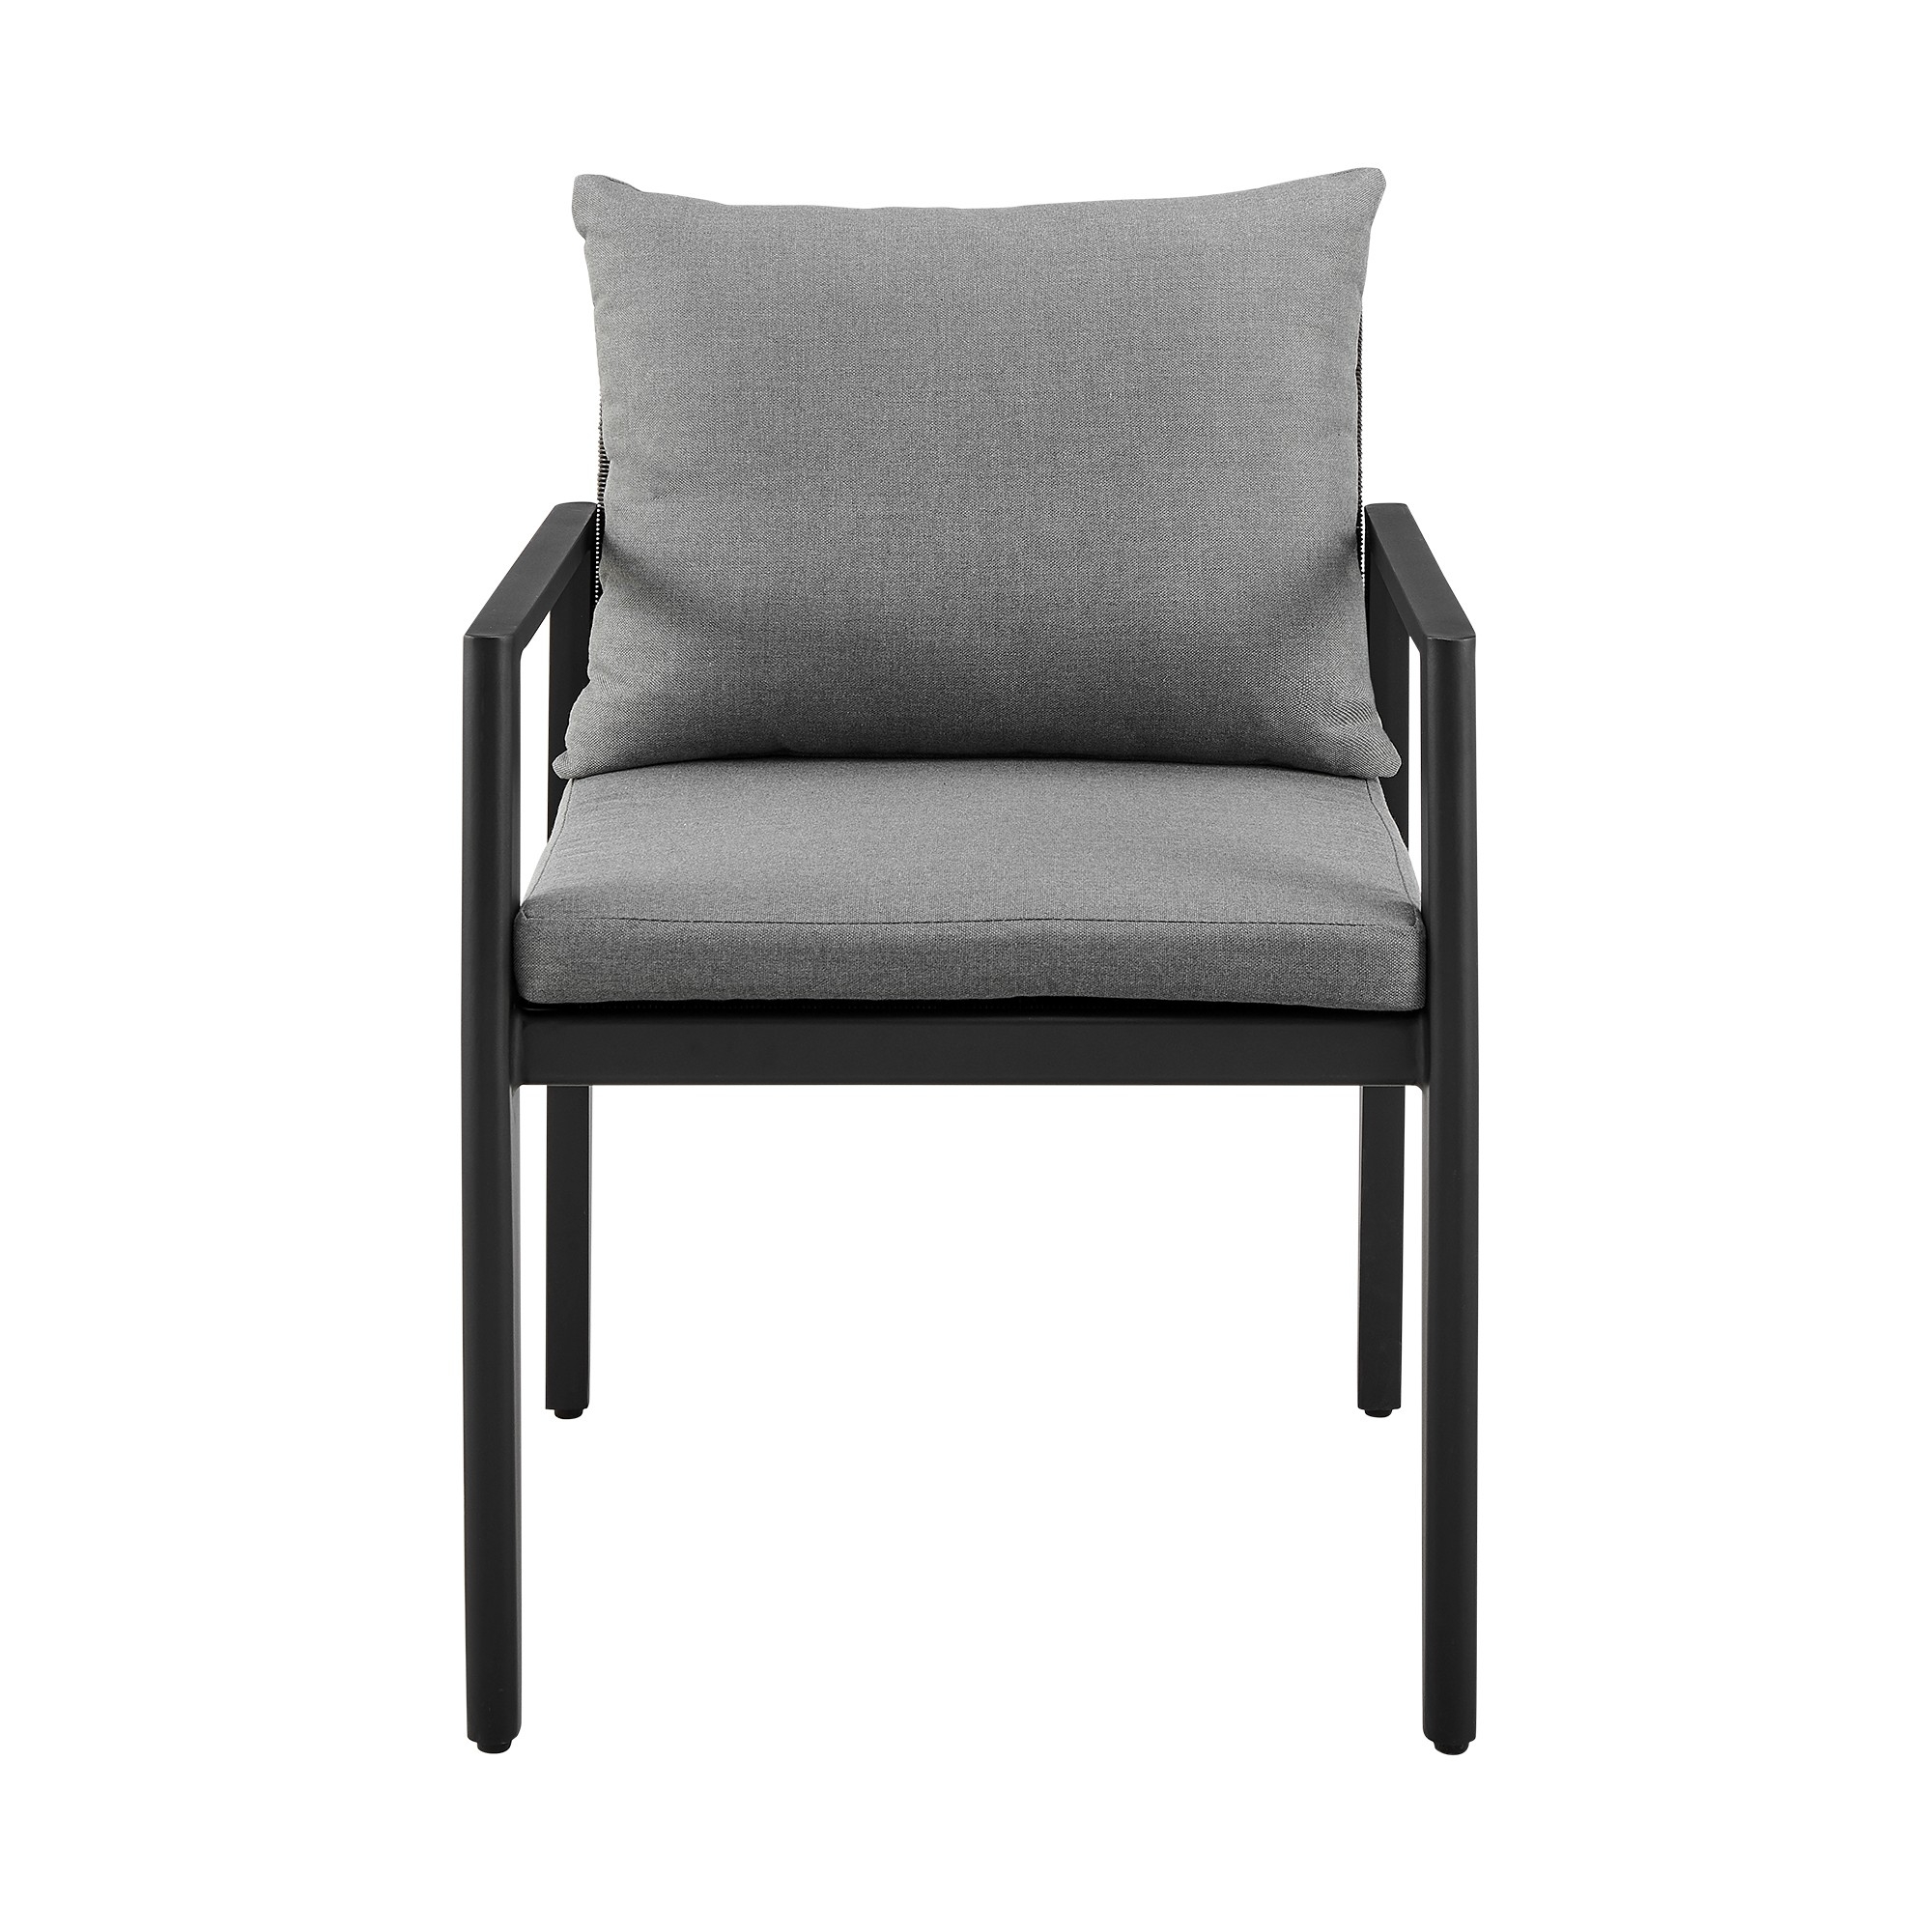 Ollie 22 Inch Patio Dining Armchair, Set Of 2, Aluminum, Gray Cushions- Saltoro Sherpi